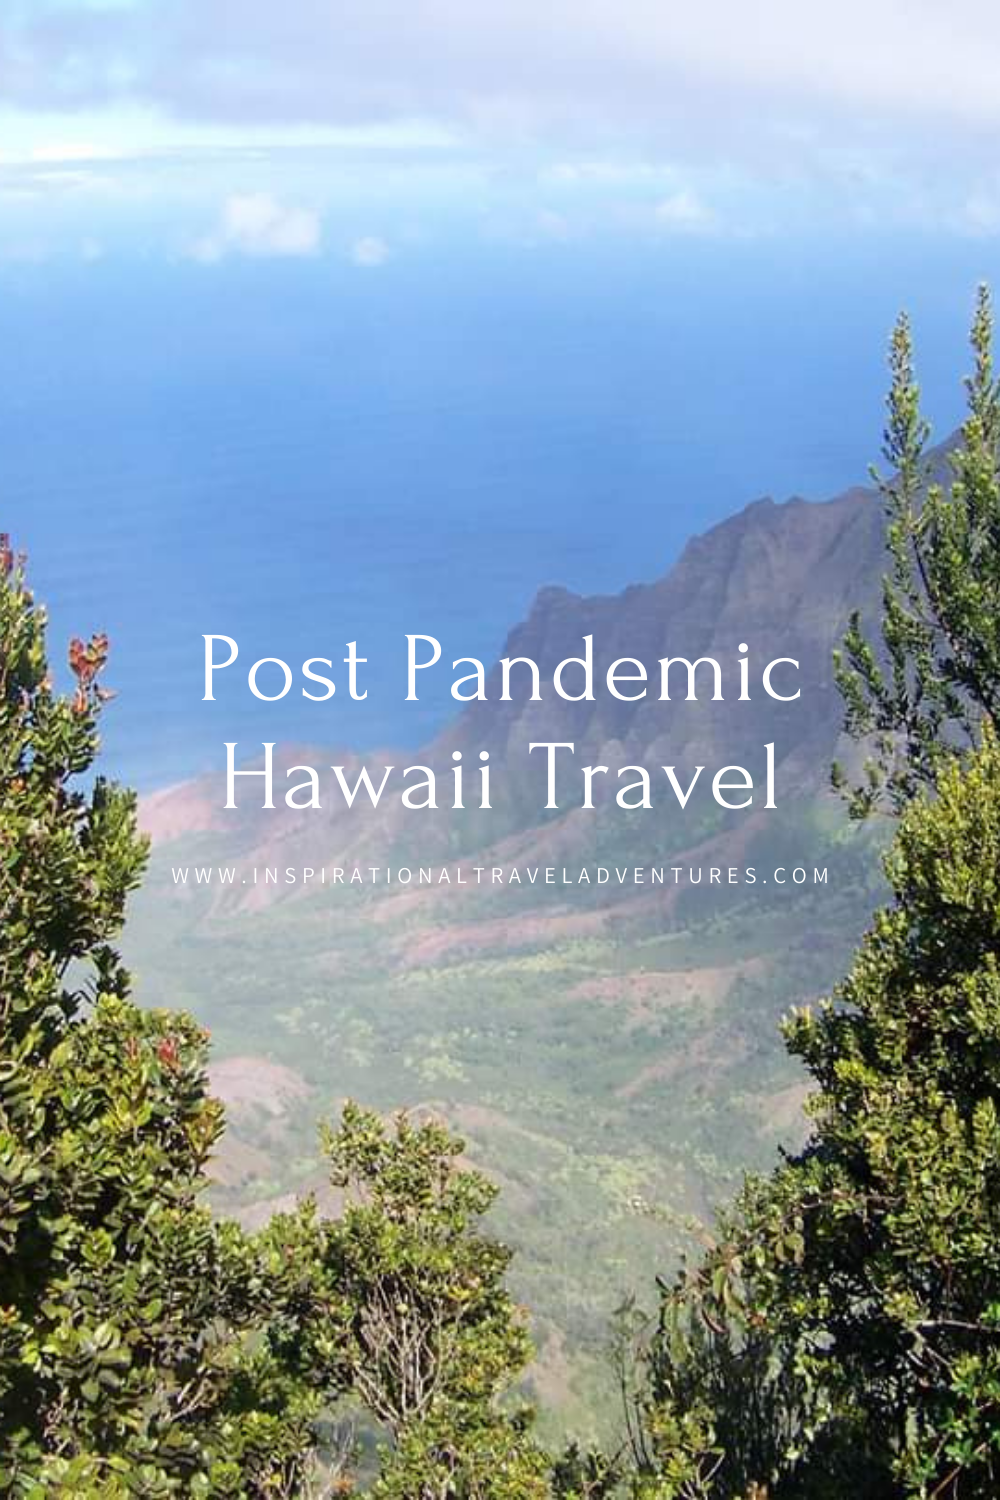 POST PANDEMIC HAWAII TRAVELS